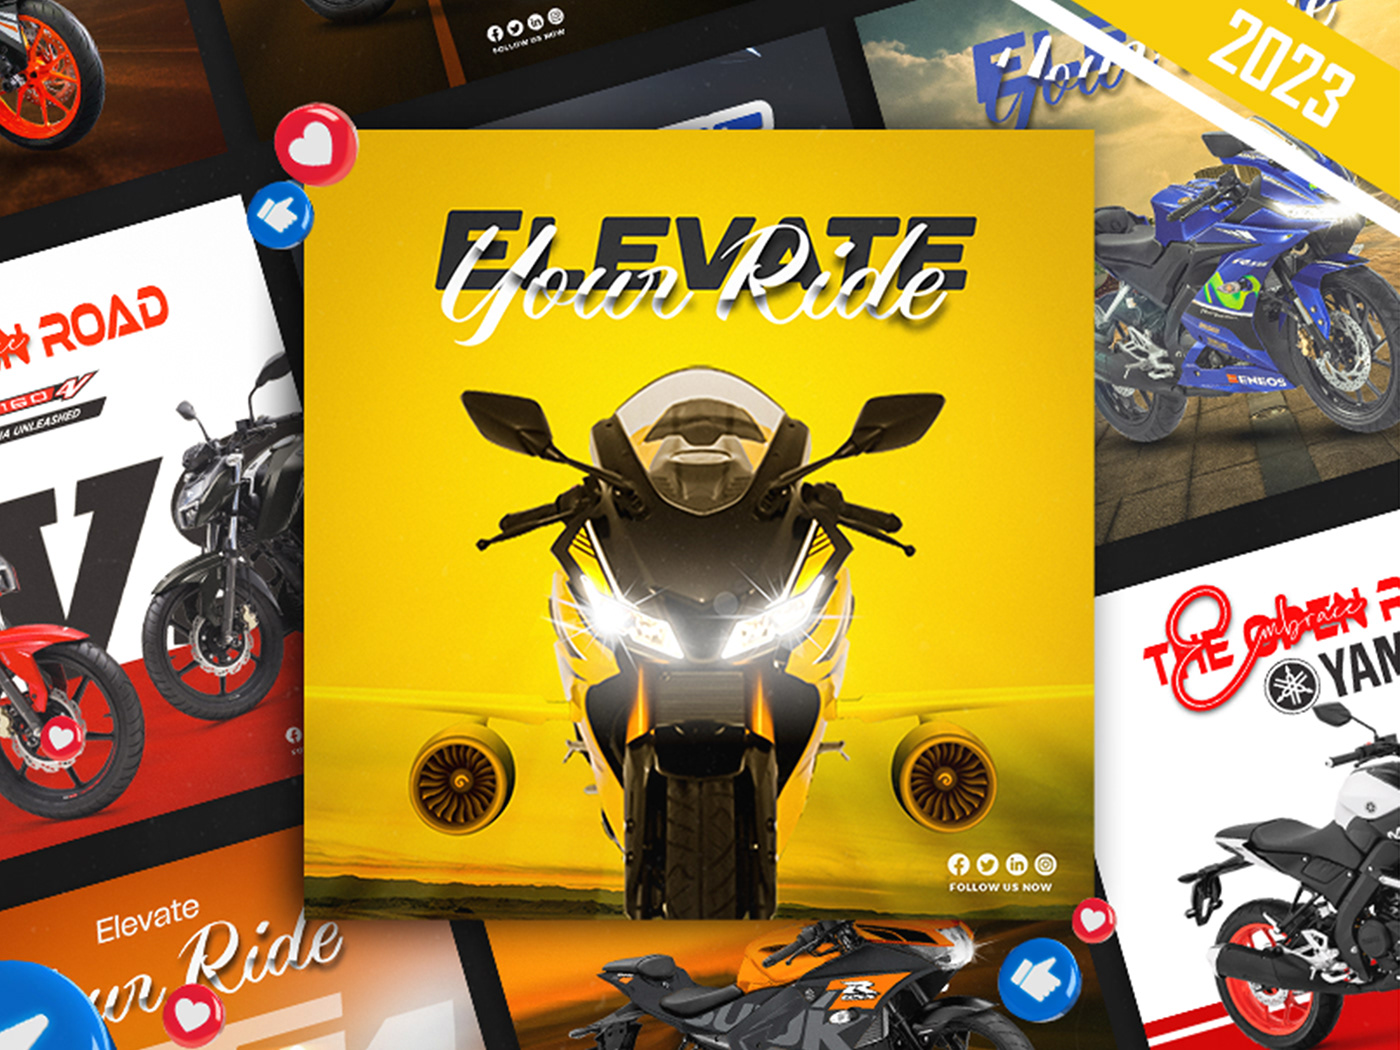 Social media post Socialmedia Graphic Designer Bike ads yamaha Bike motorcycle Honda Racing